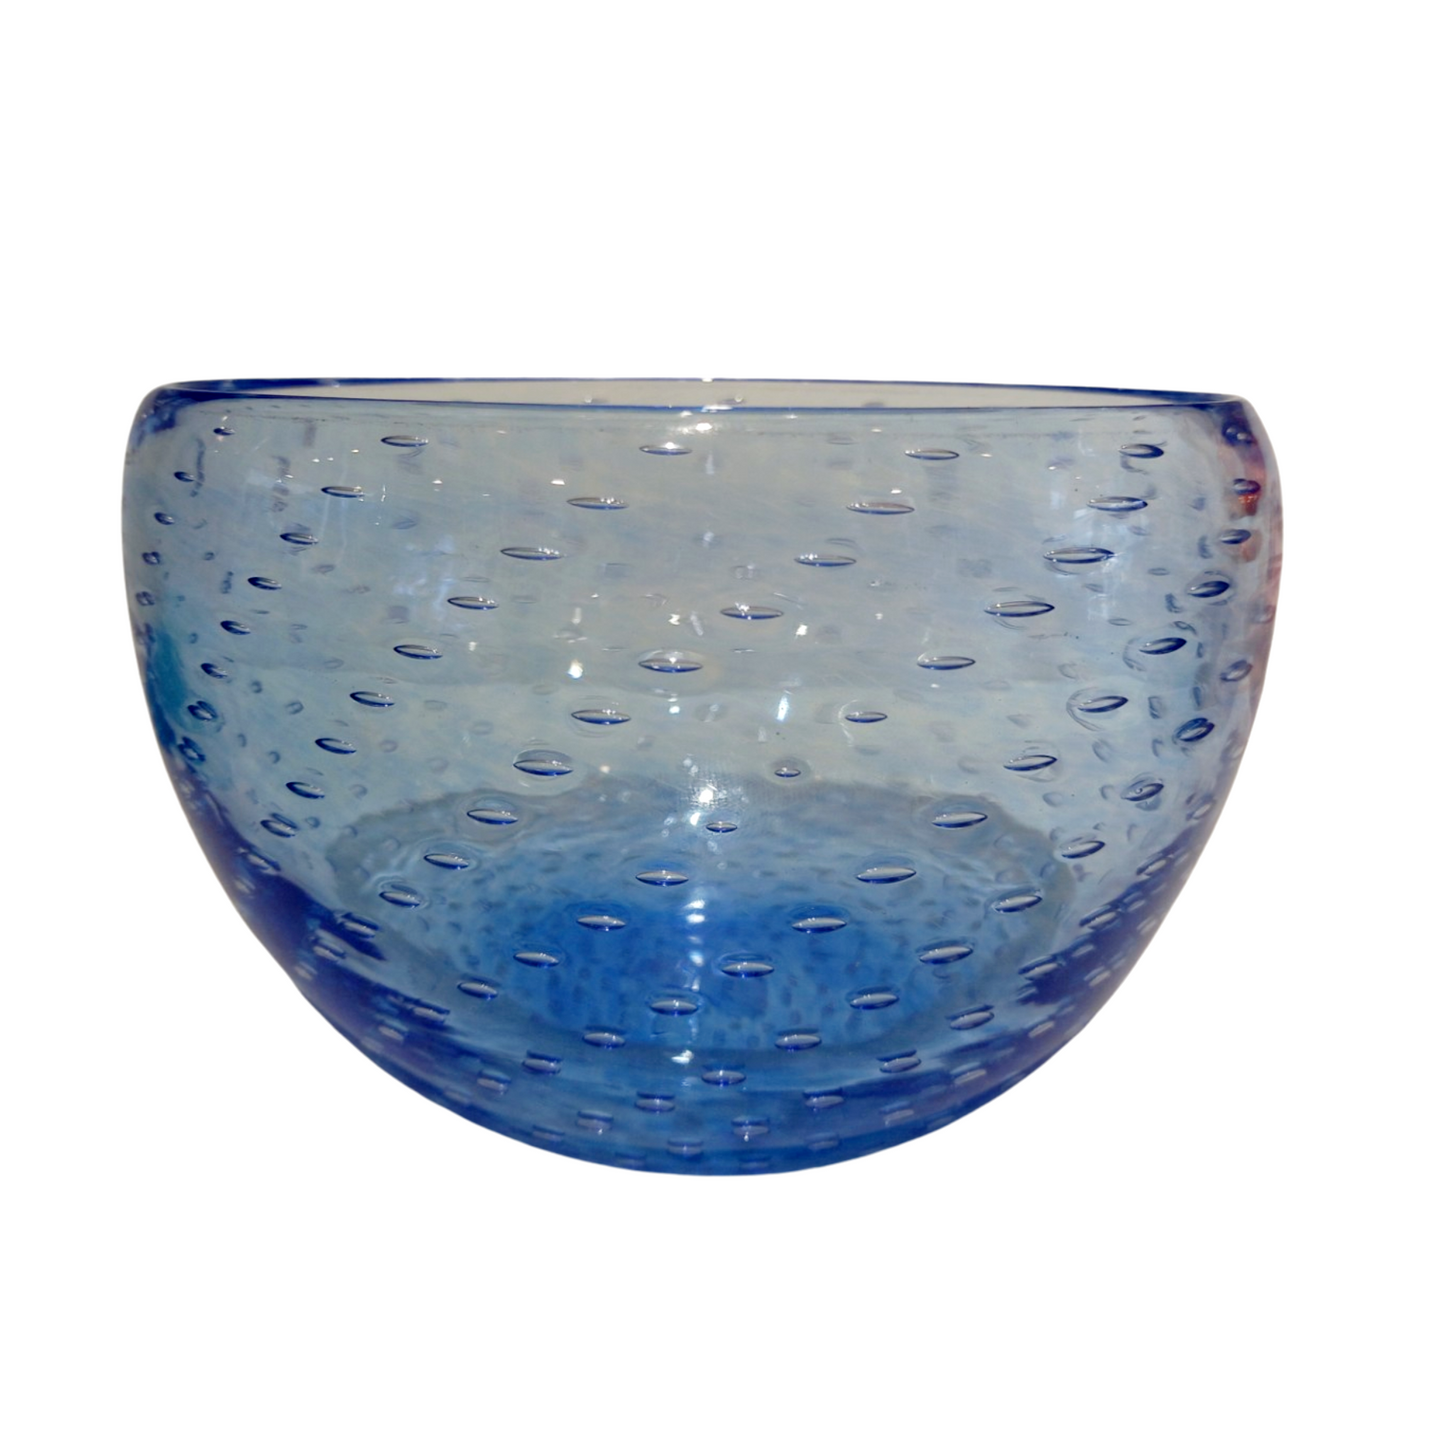 Bubble Bowl in periwinkle blue